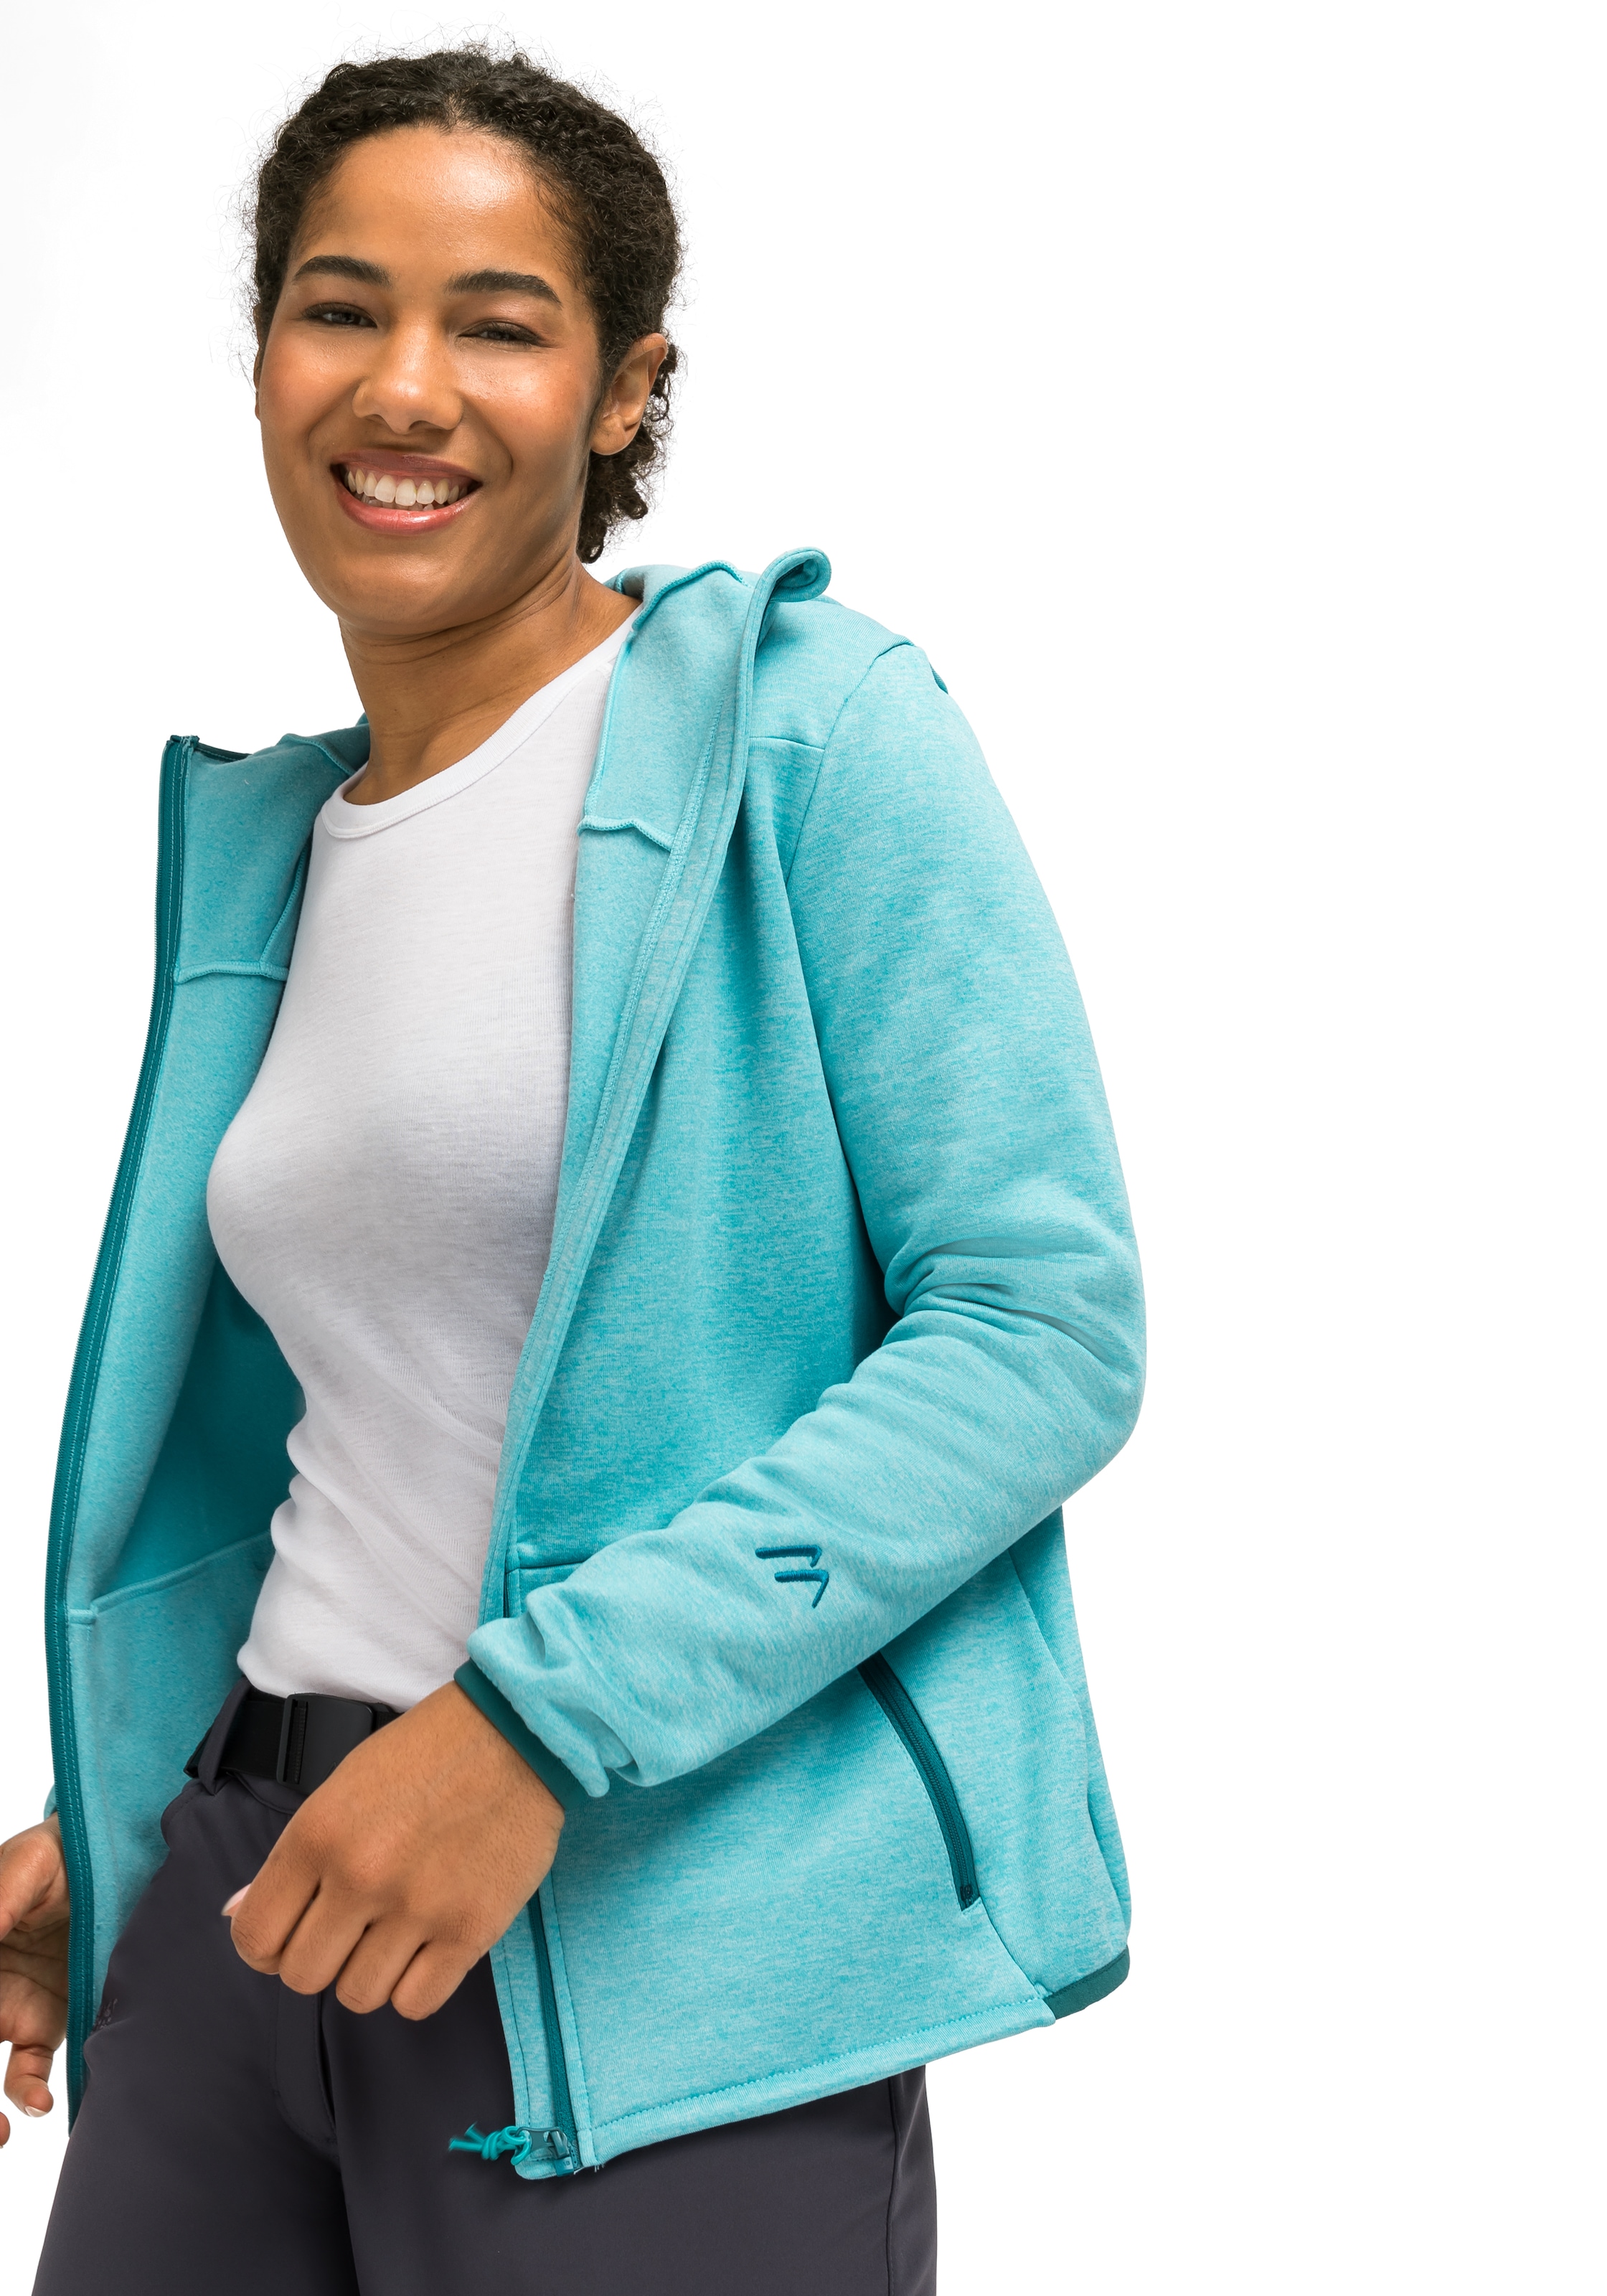 Maier Sports Fleecejacke »Fave W«, Damen Fleece mit verstellbarer Kapuze, atmungsaktiver  Zip-Hoodie kaufen | BAUR